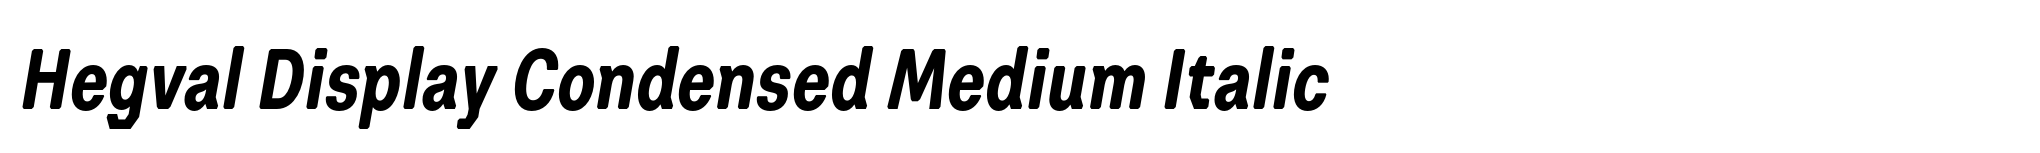 Hegval Display Condensed Medium Italic image